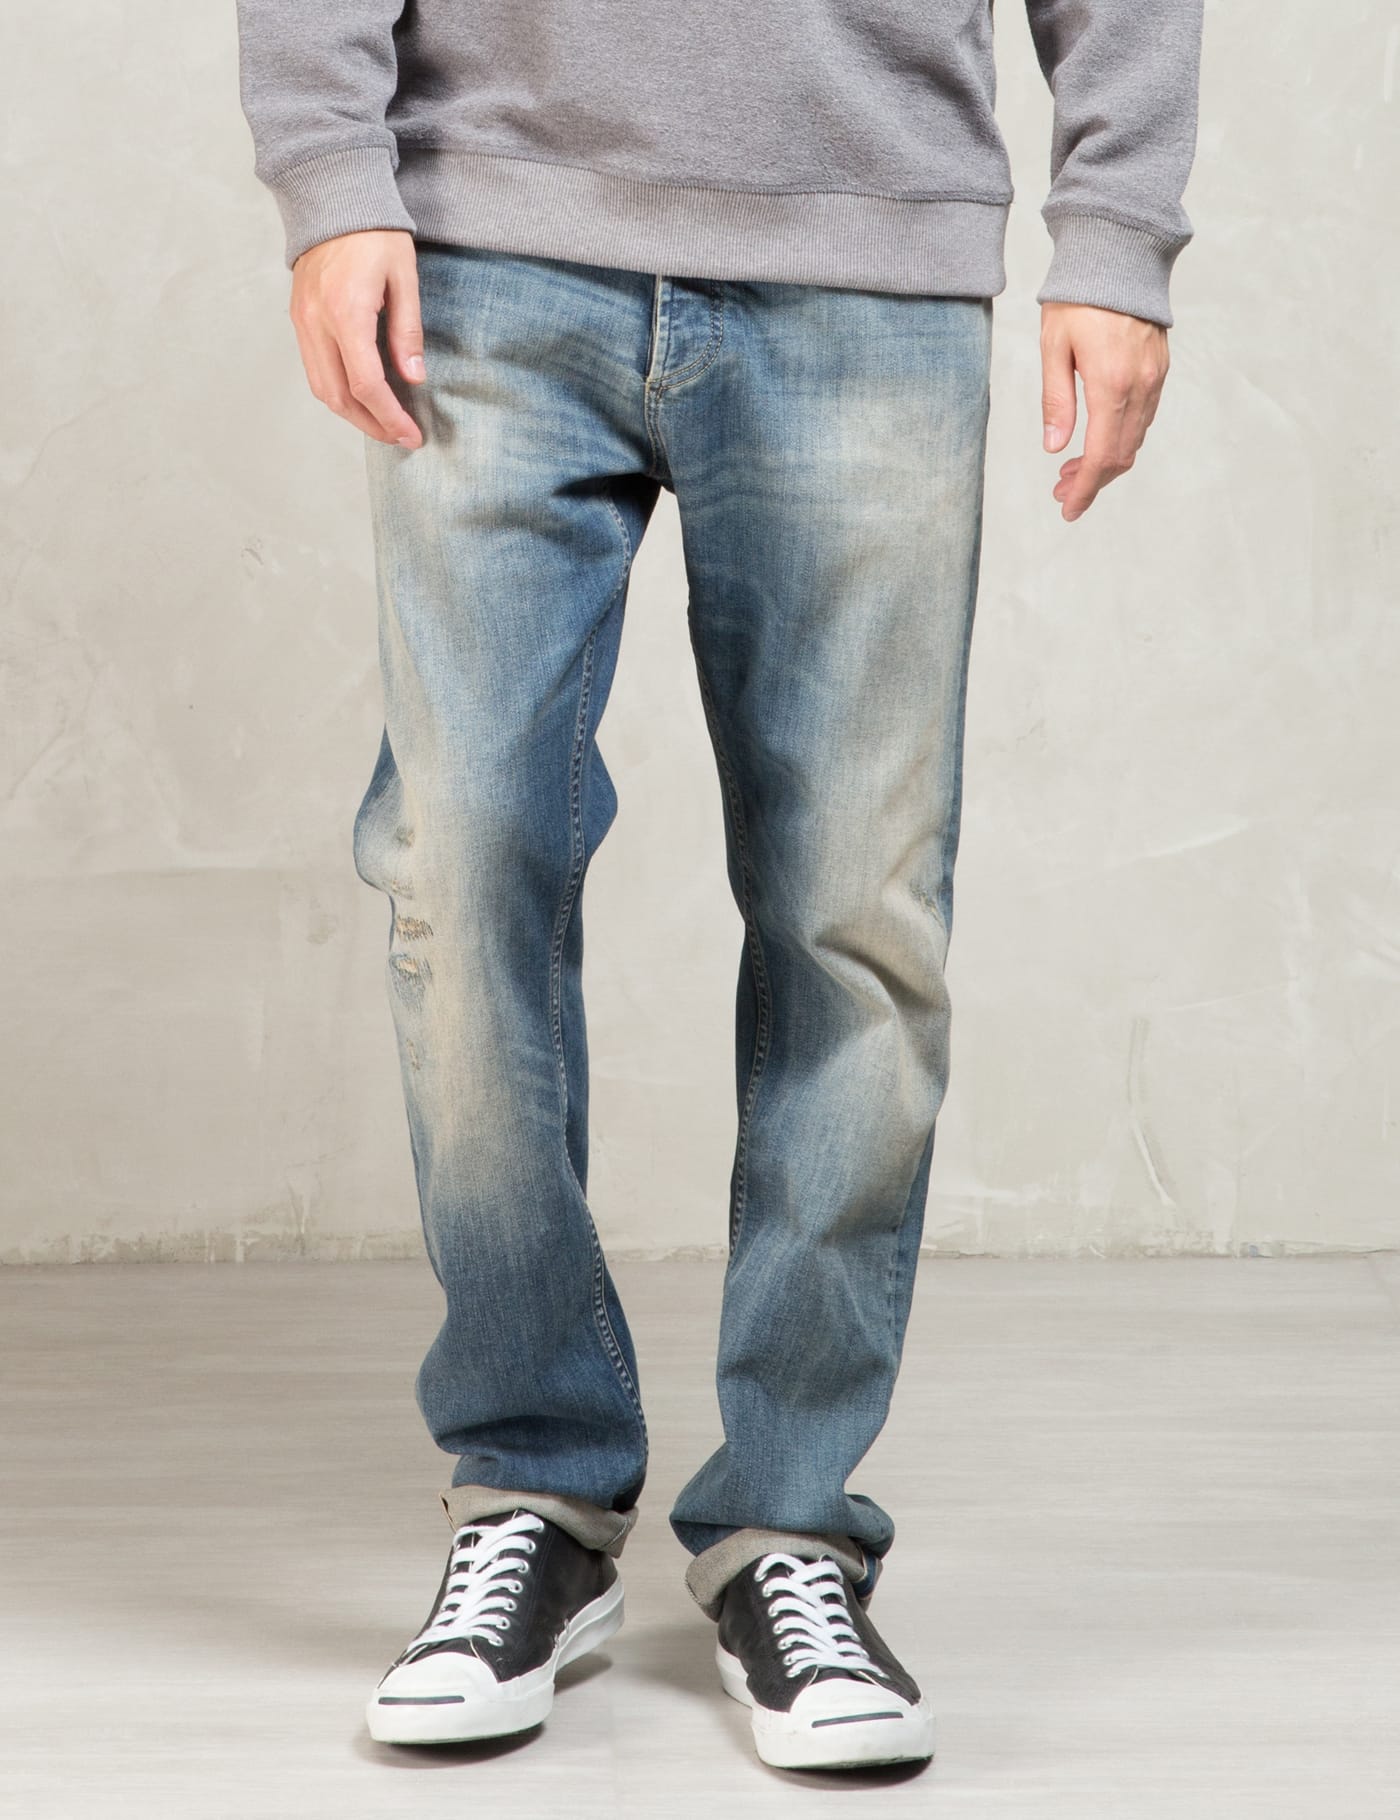 Denham - Indigo Razor SSA192 Slim Fit Jeans | HBX - Globally